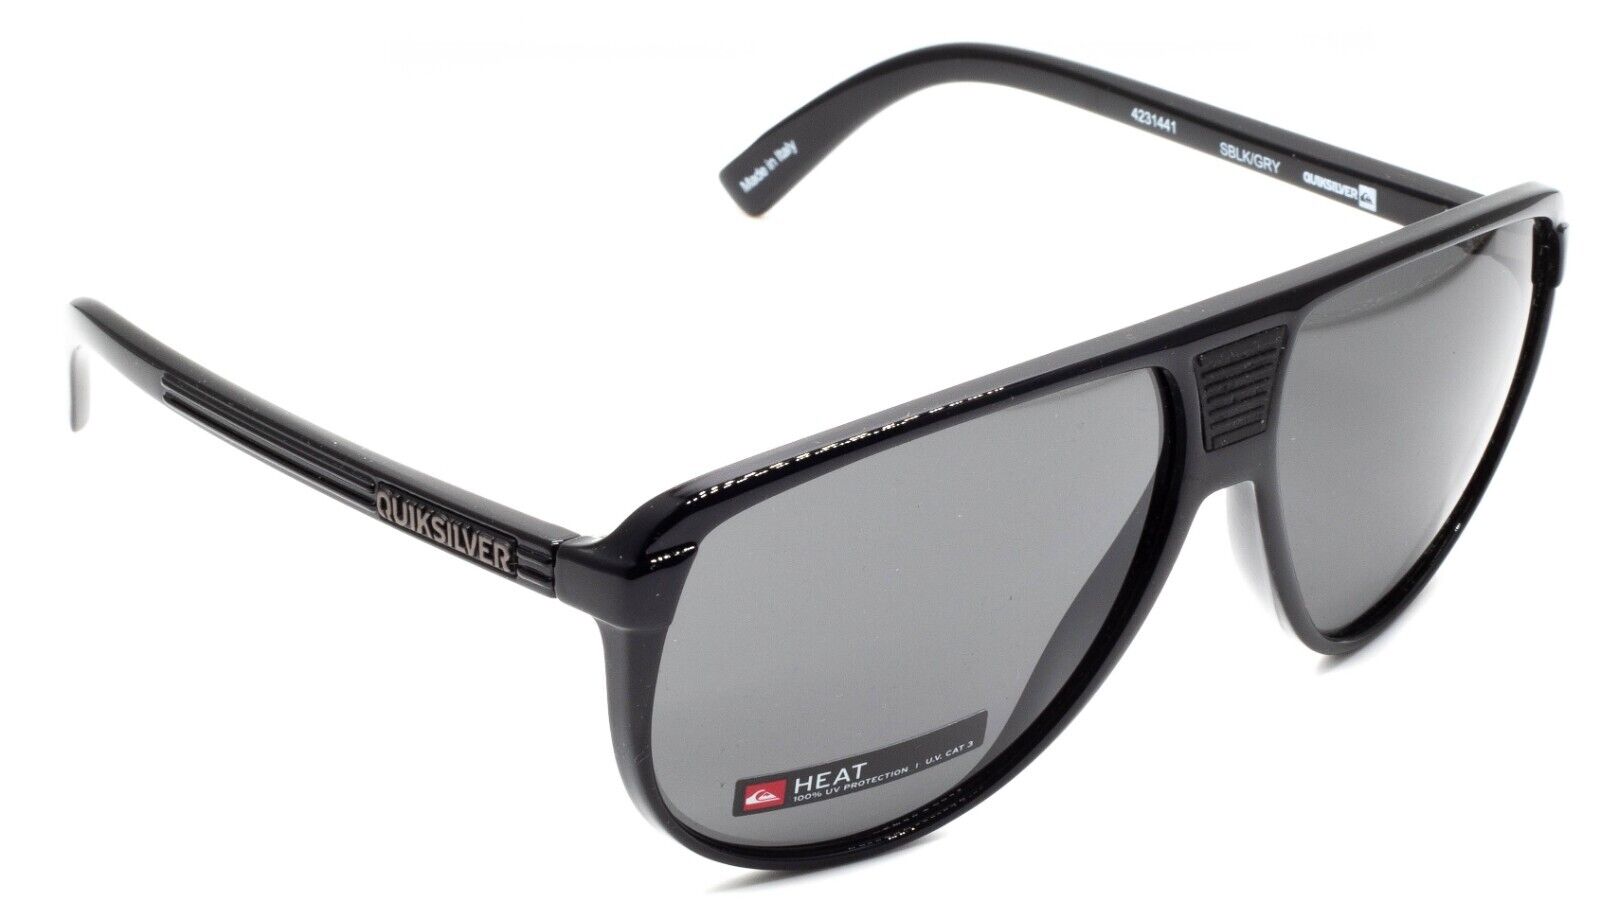 HEAT Glasses 59mm 229 Shades 4231441 Eyewear Sunglasses QUIKSILVER -Italy QS1176 Eyewear - GGV